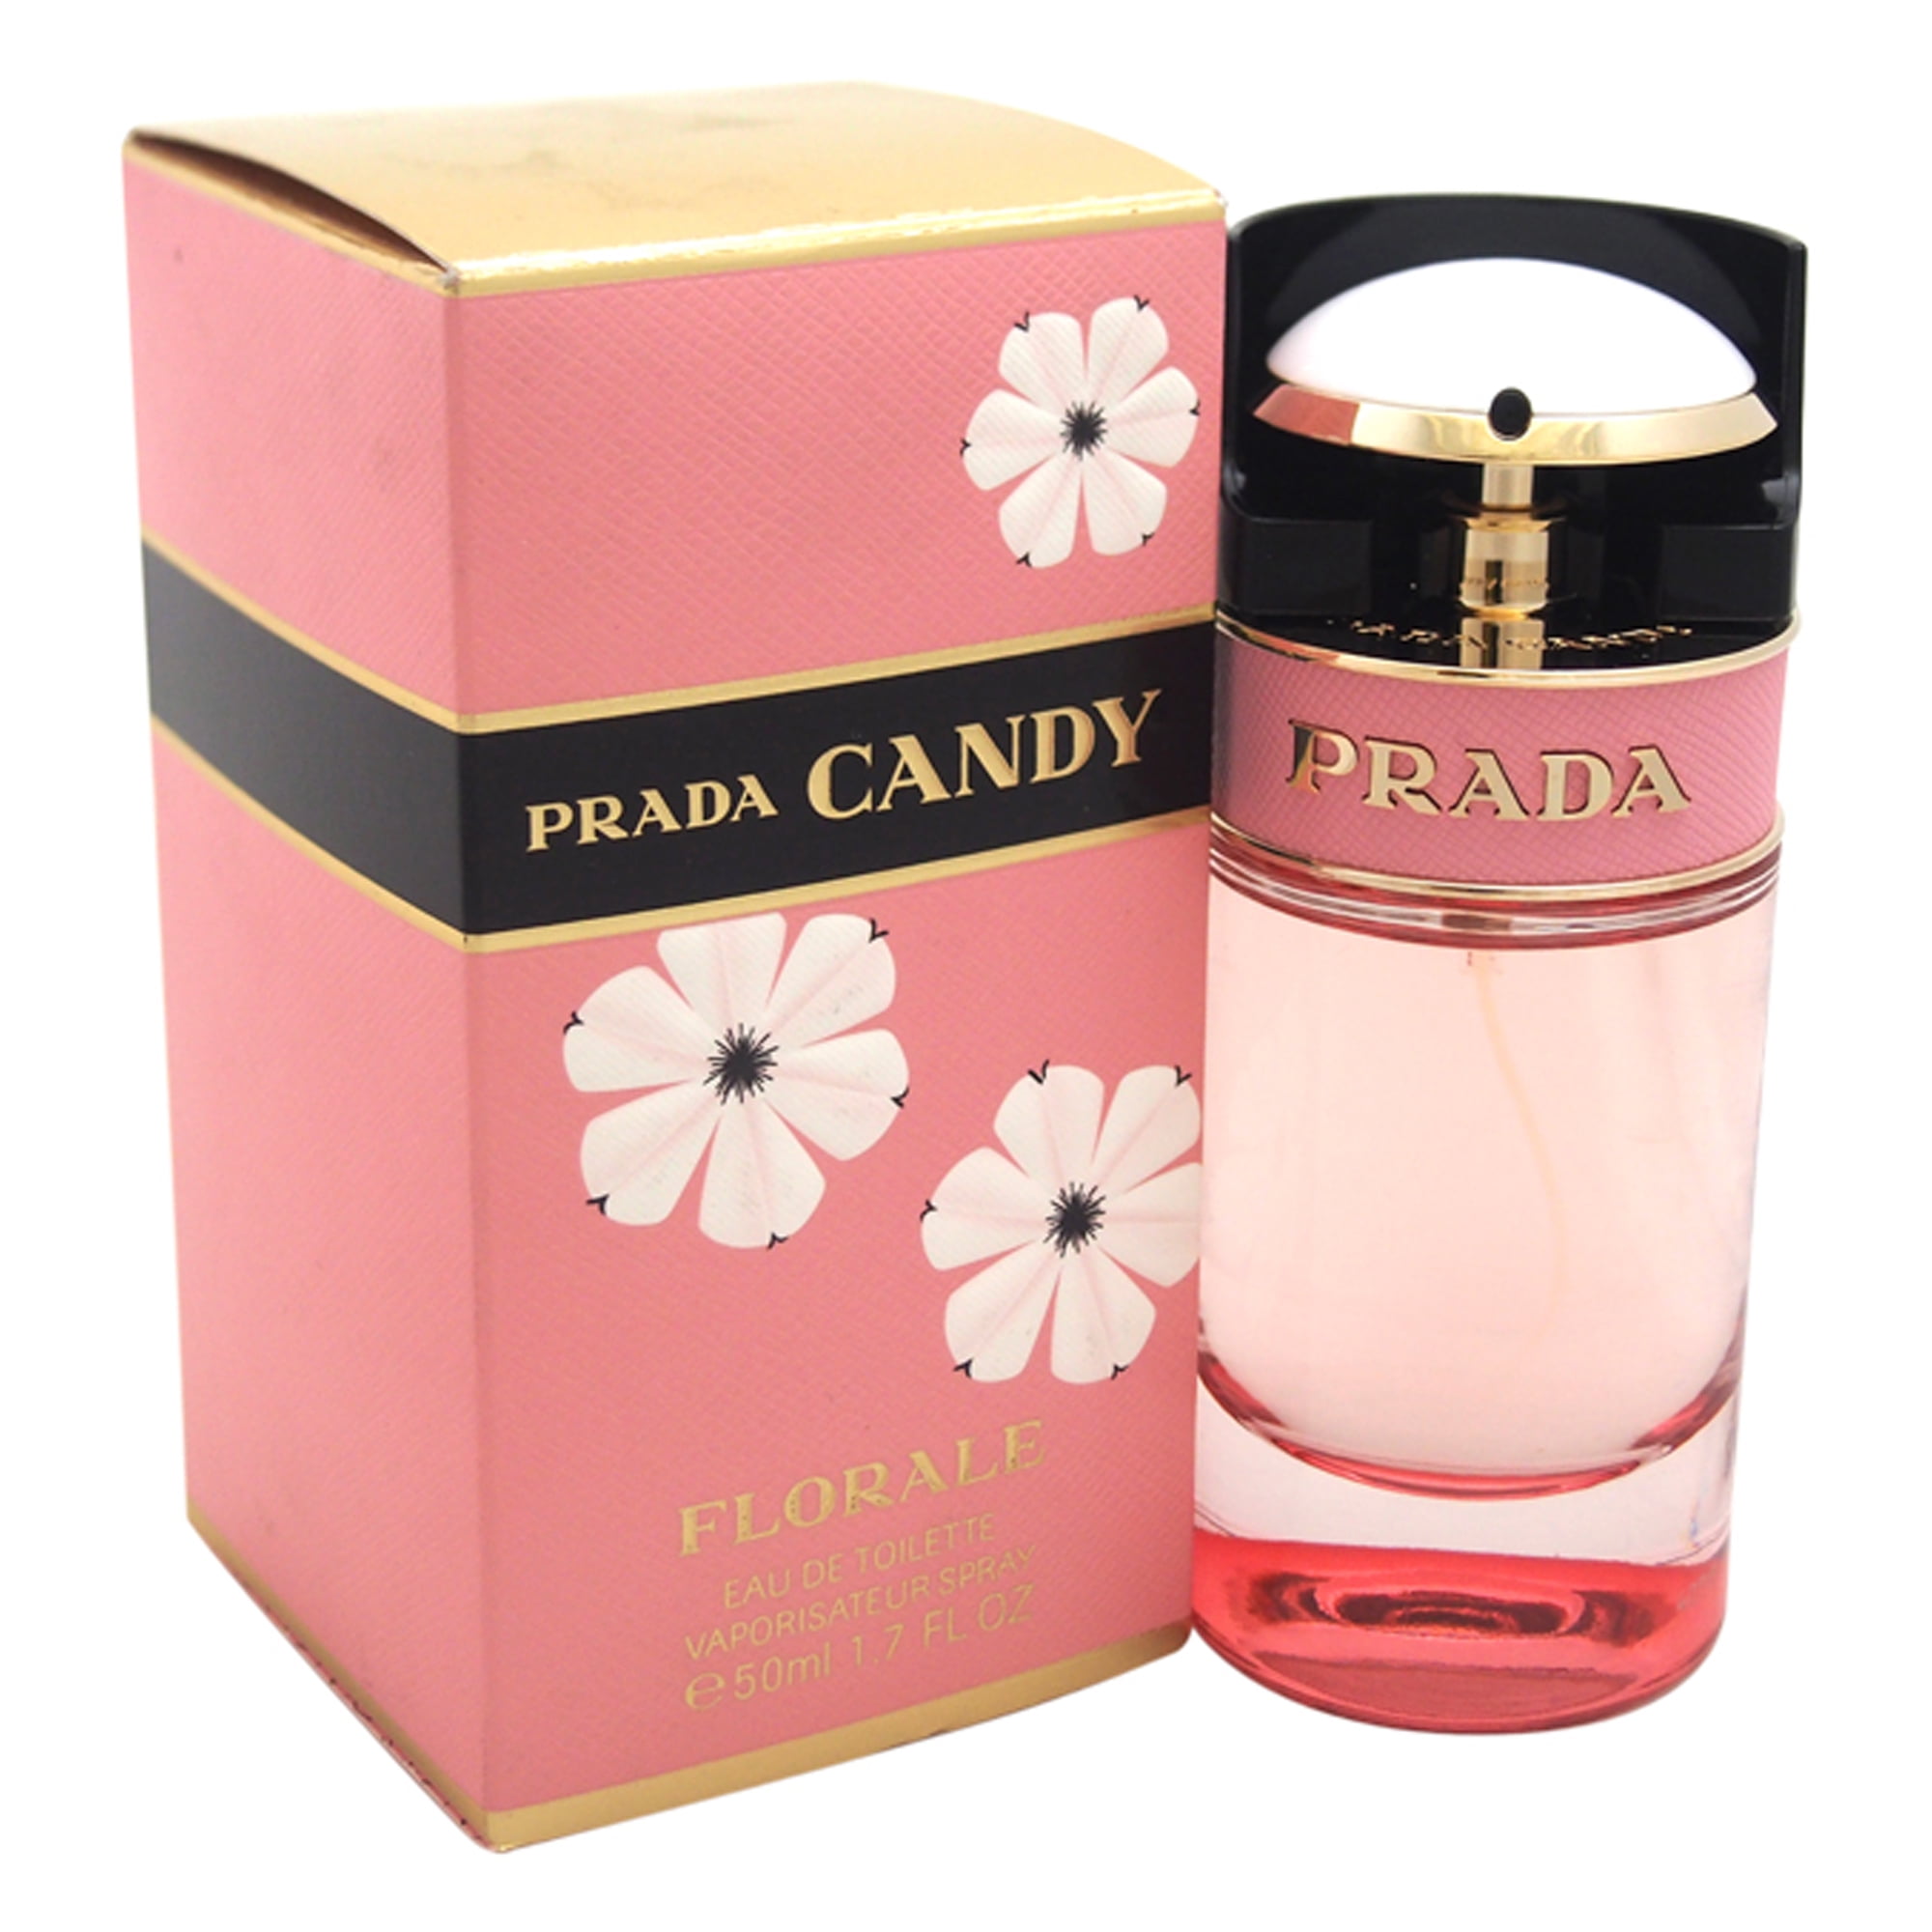 Prada - Prada Candy Florale Eau De Toilette Perfume for Women 1.7 oz